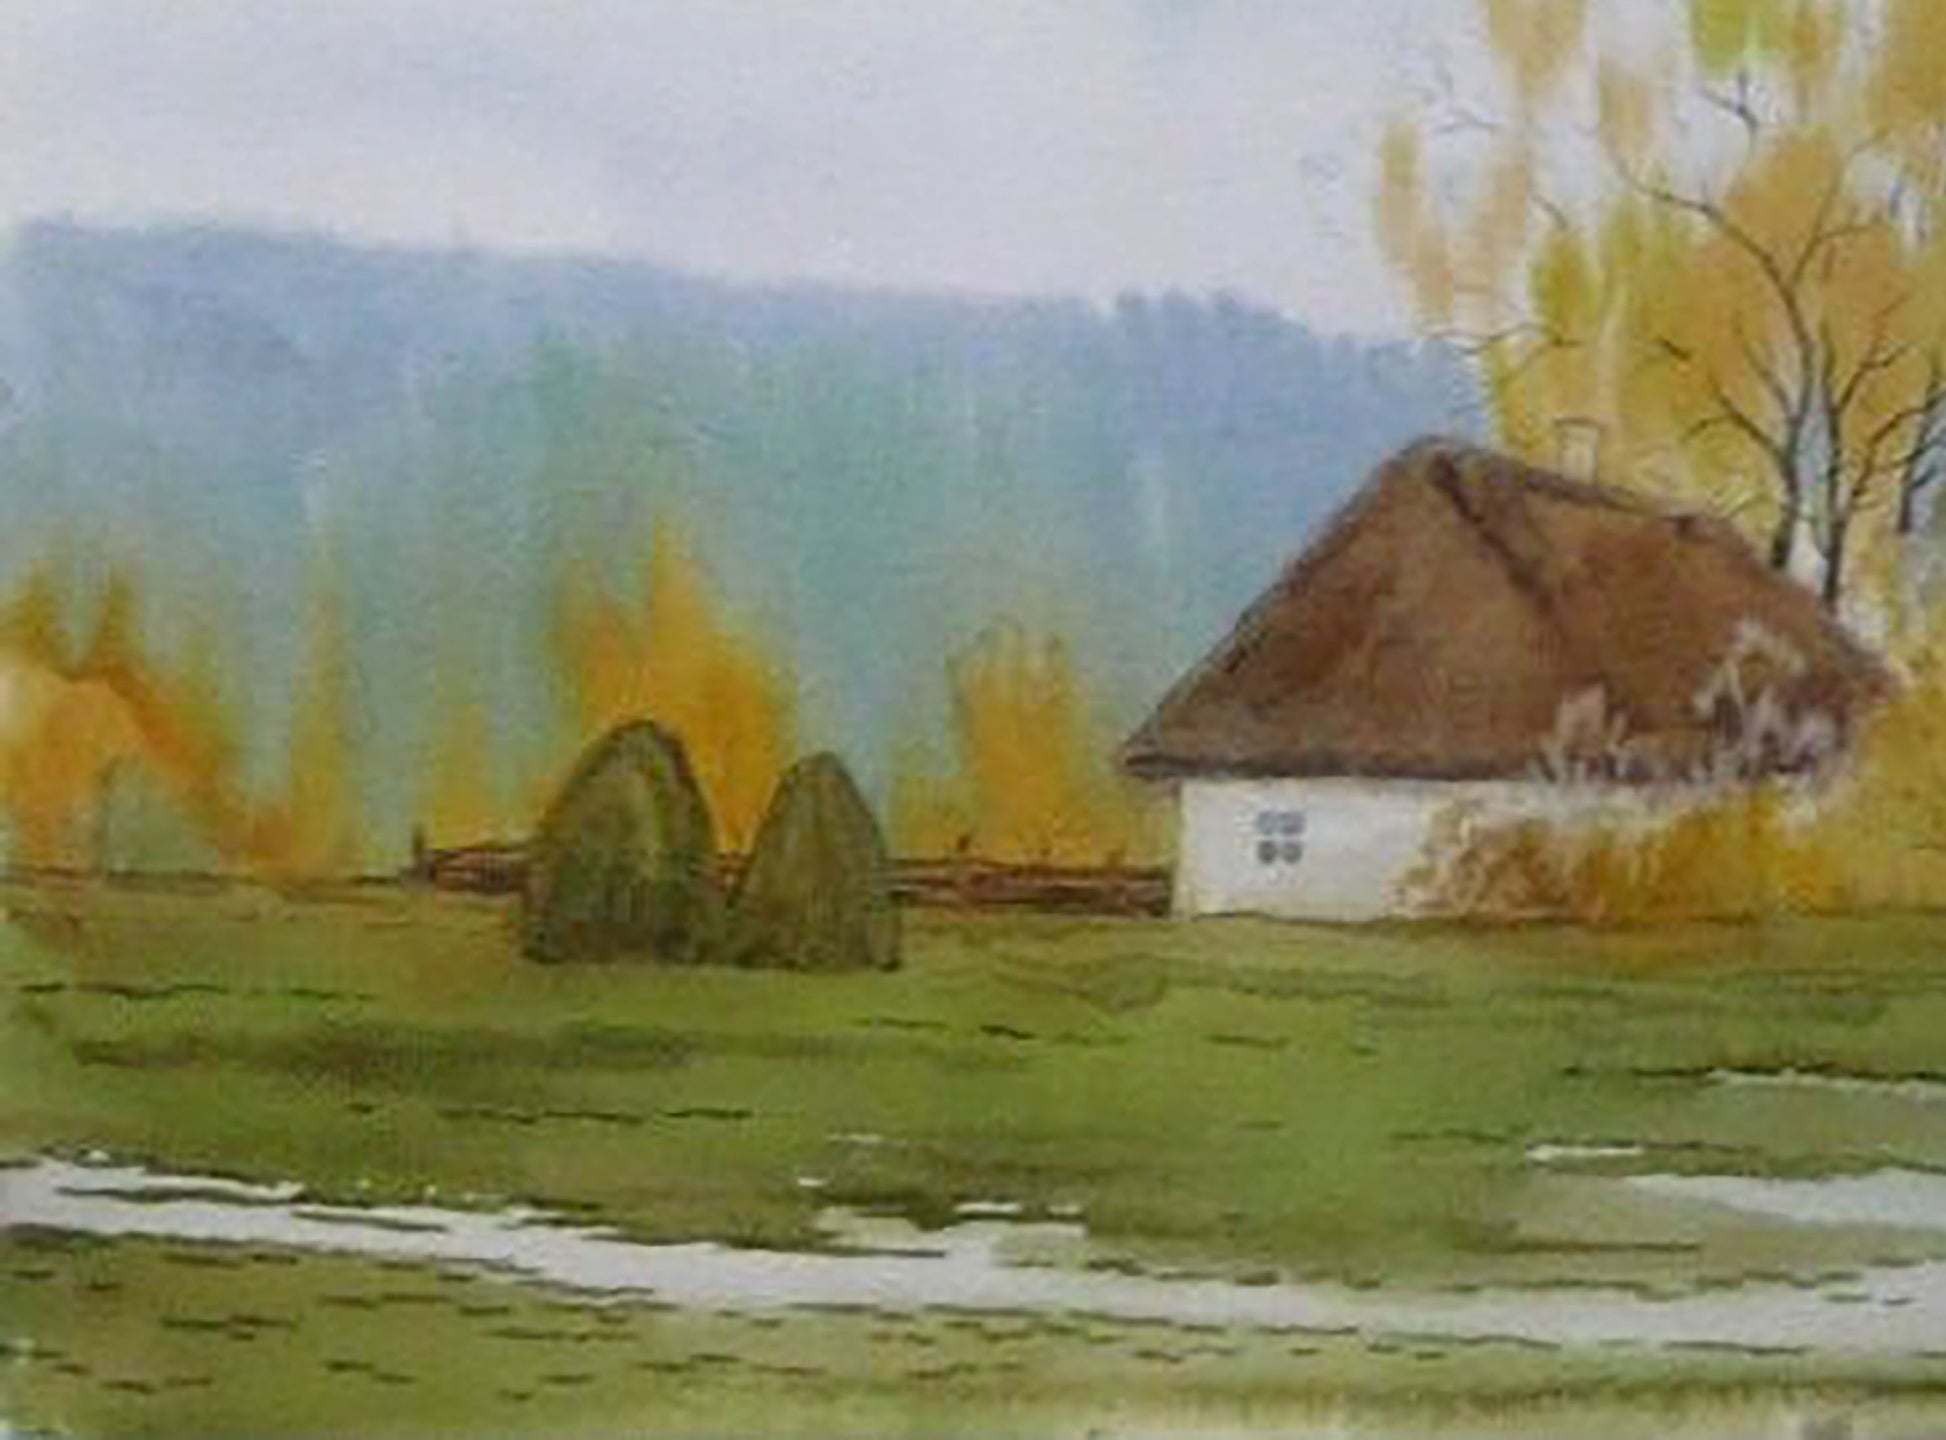 Valery Savenets captures the atmosphere of post-rain in his watercolor painting